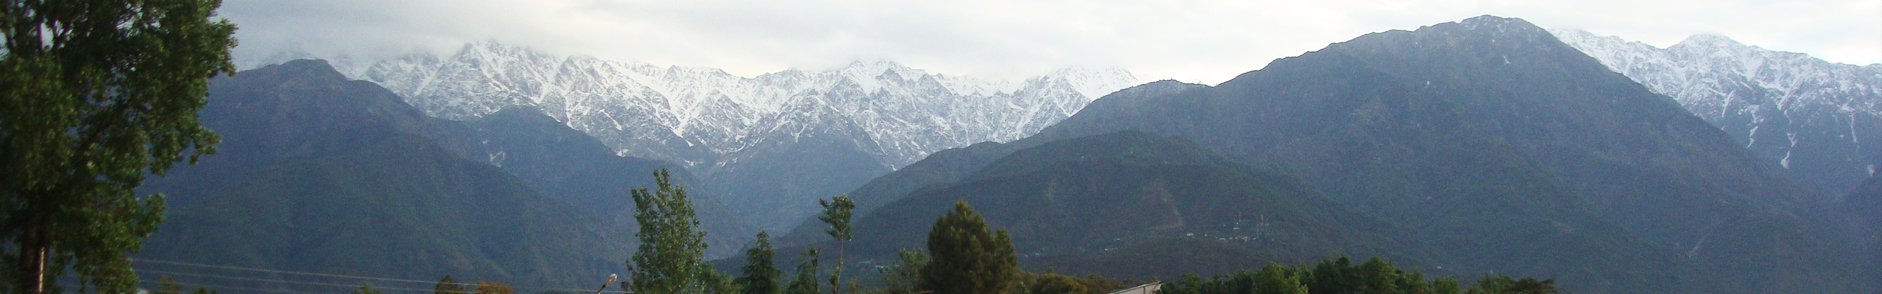 Neugal Khad Palampur, Himachal